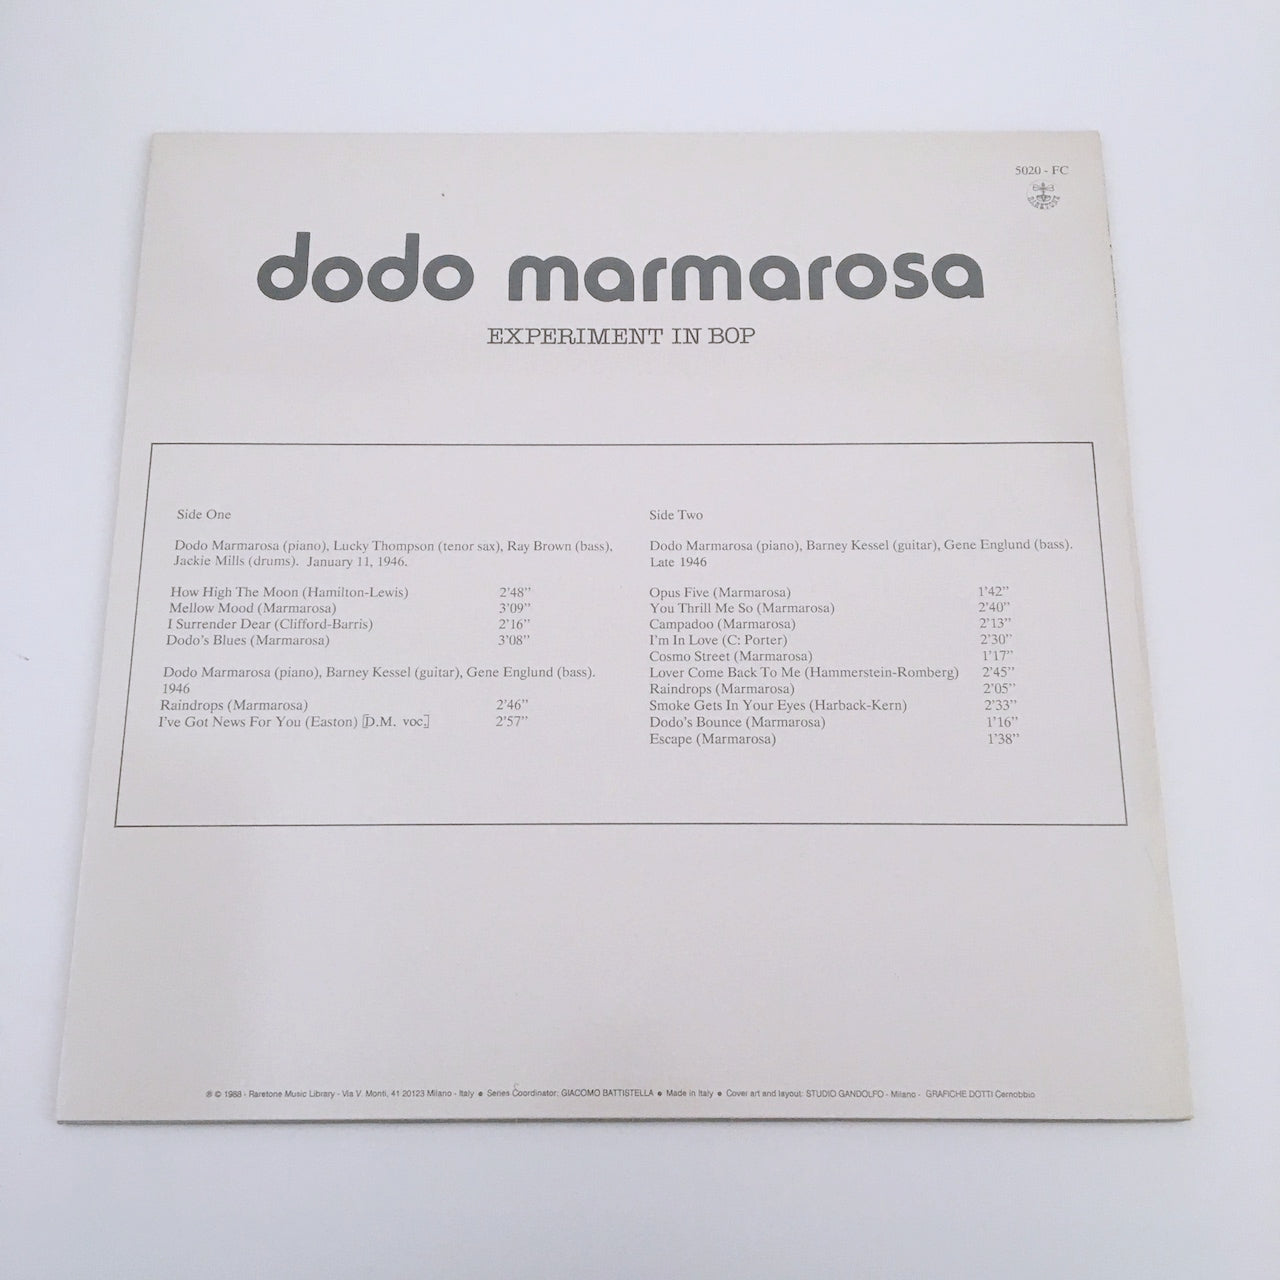 LP/ DODO MARMAROSA / EXPERIMENT IN BOP / イタリア盤 RARETONE 5020FC